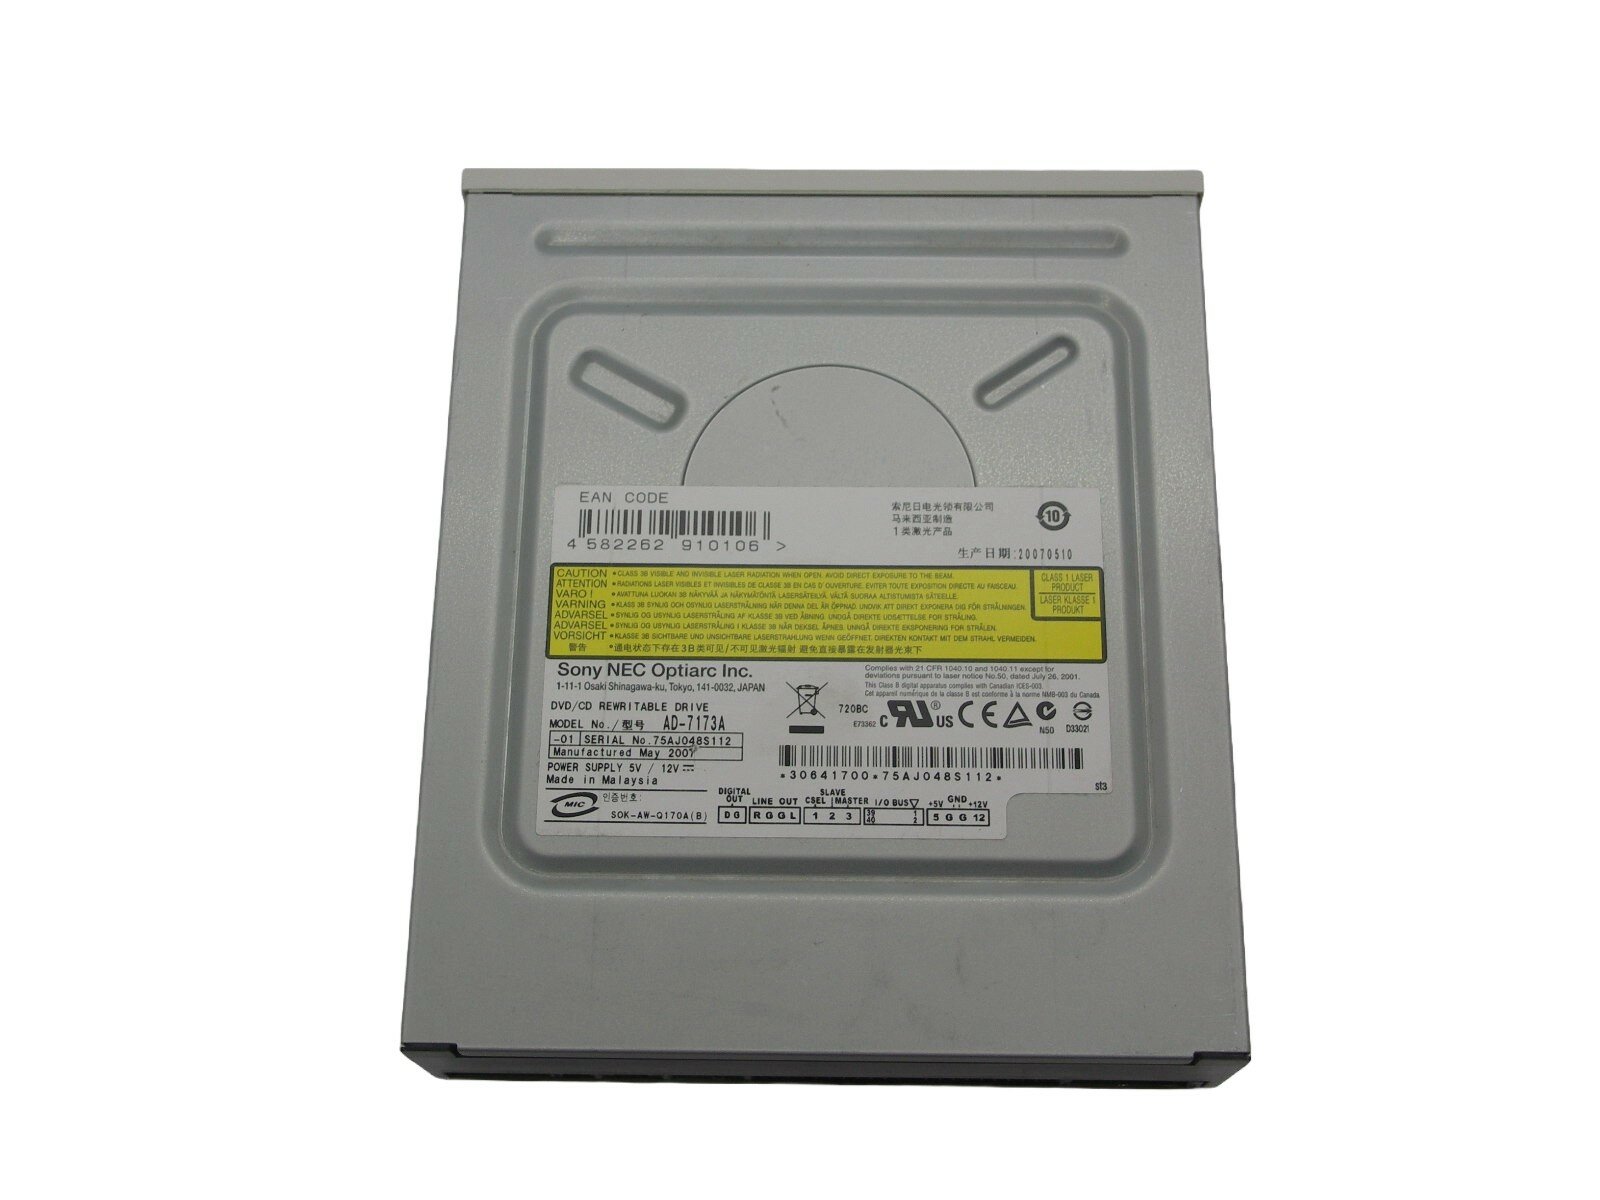 Оптический привод DVD +R/RW CD-R/RW Sony NEC Optiarc AD-7173A (IDE) белый